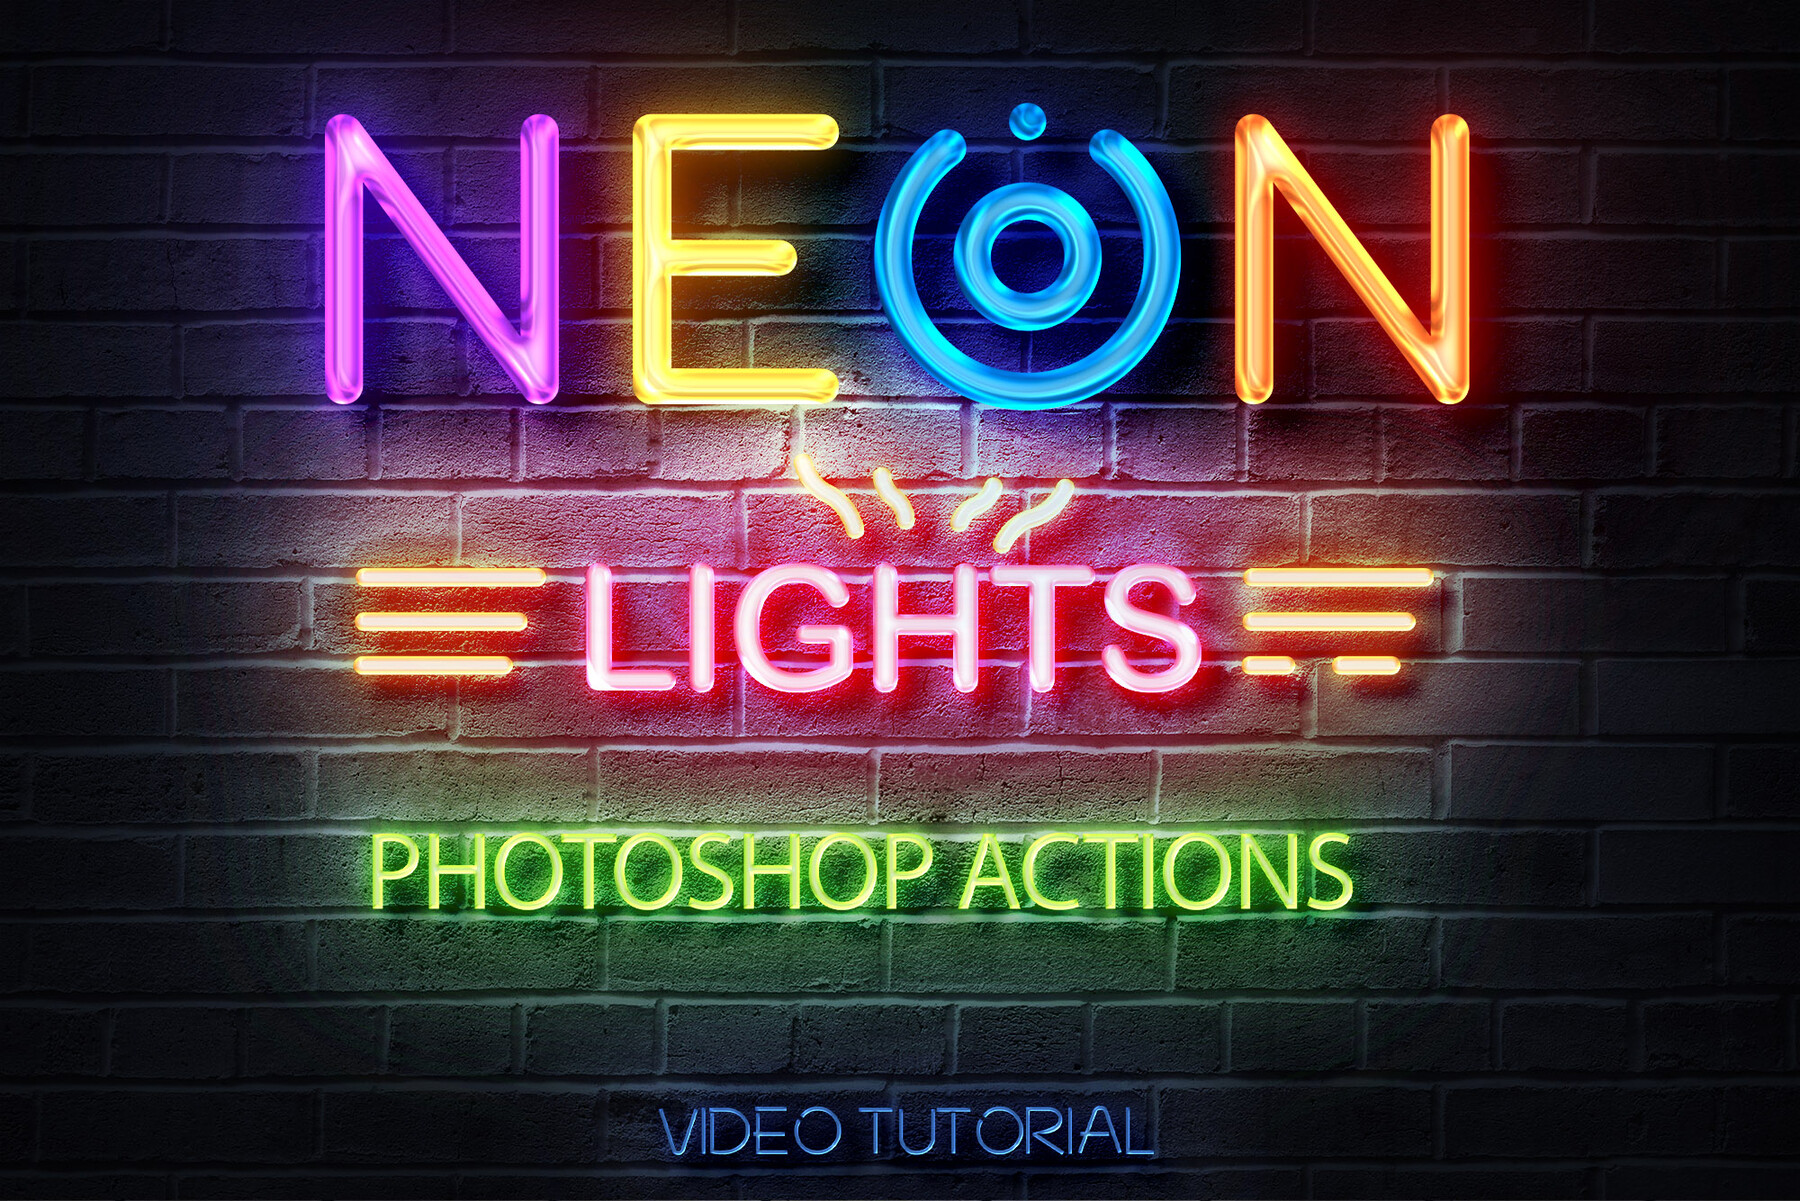 ArtStation - Neon Photoshop Actions, Neon Maker Neon Template Creator, Neon Sign Photoshop Action, Glowing street light neon | Artworks